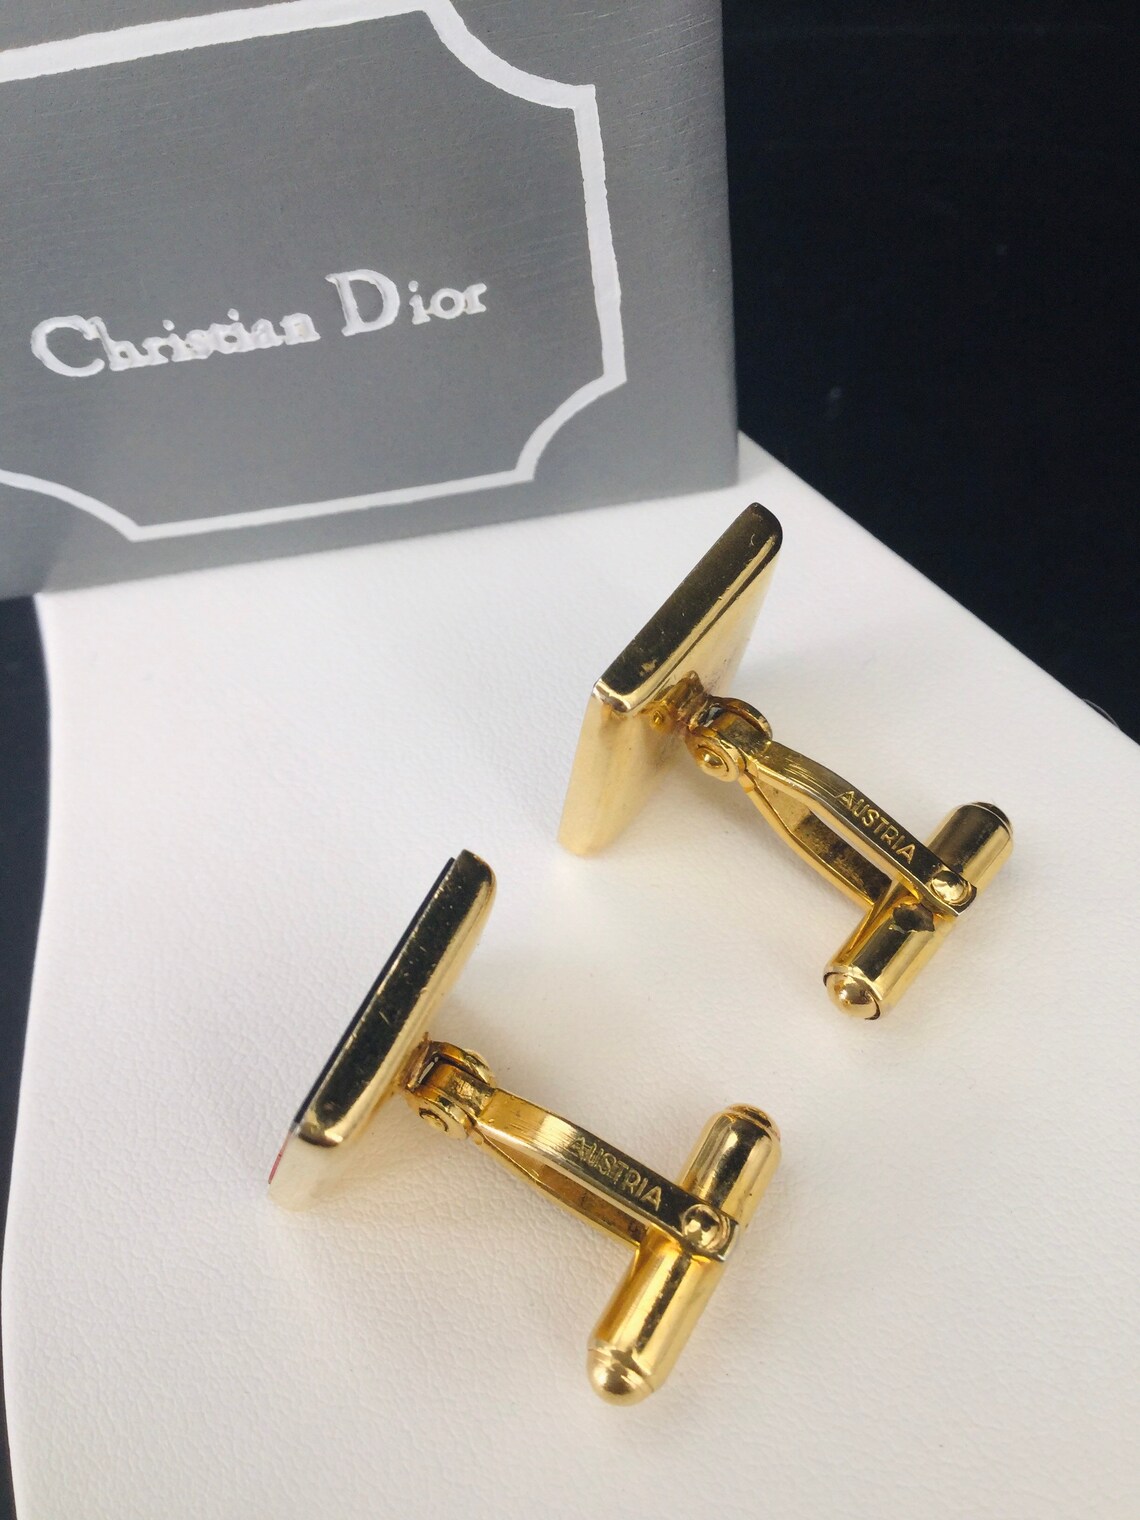 Vintage Christian Dior Cufflinks Glass Inlaid | Etsy